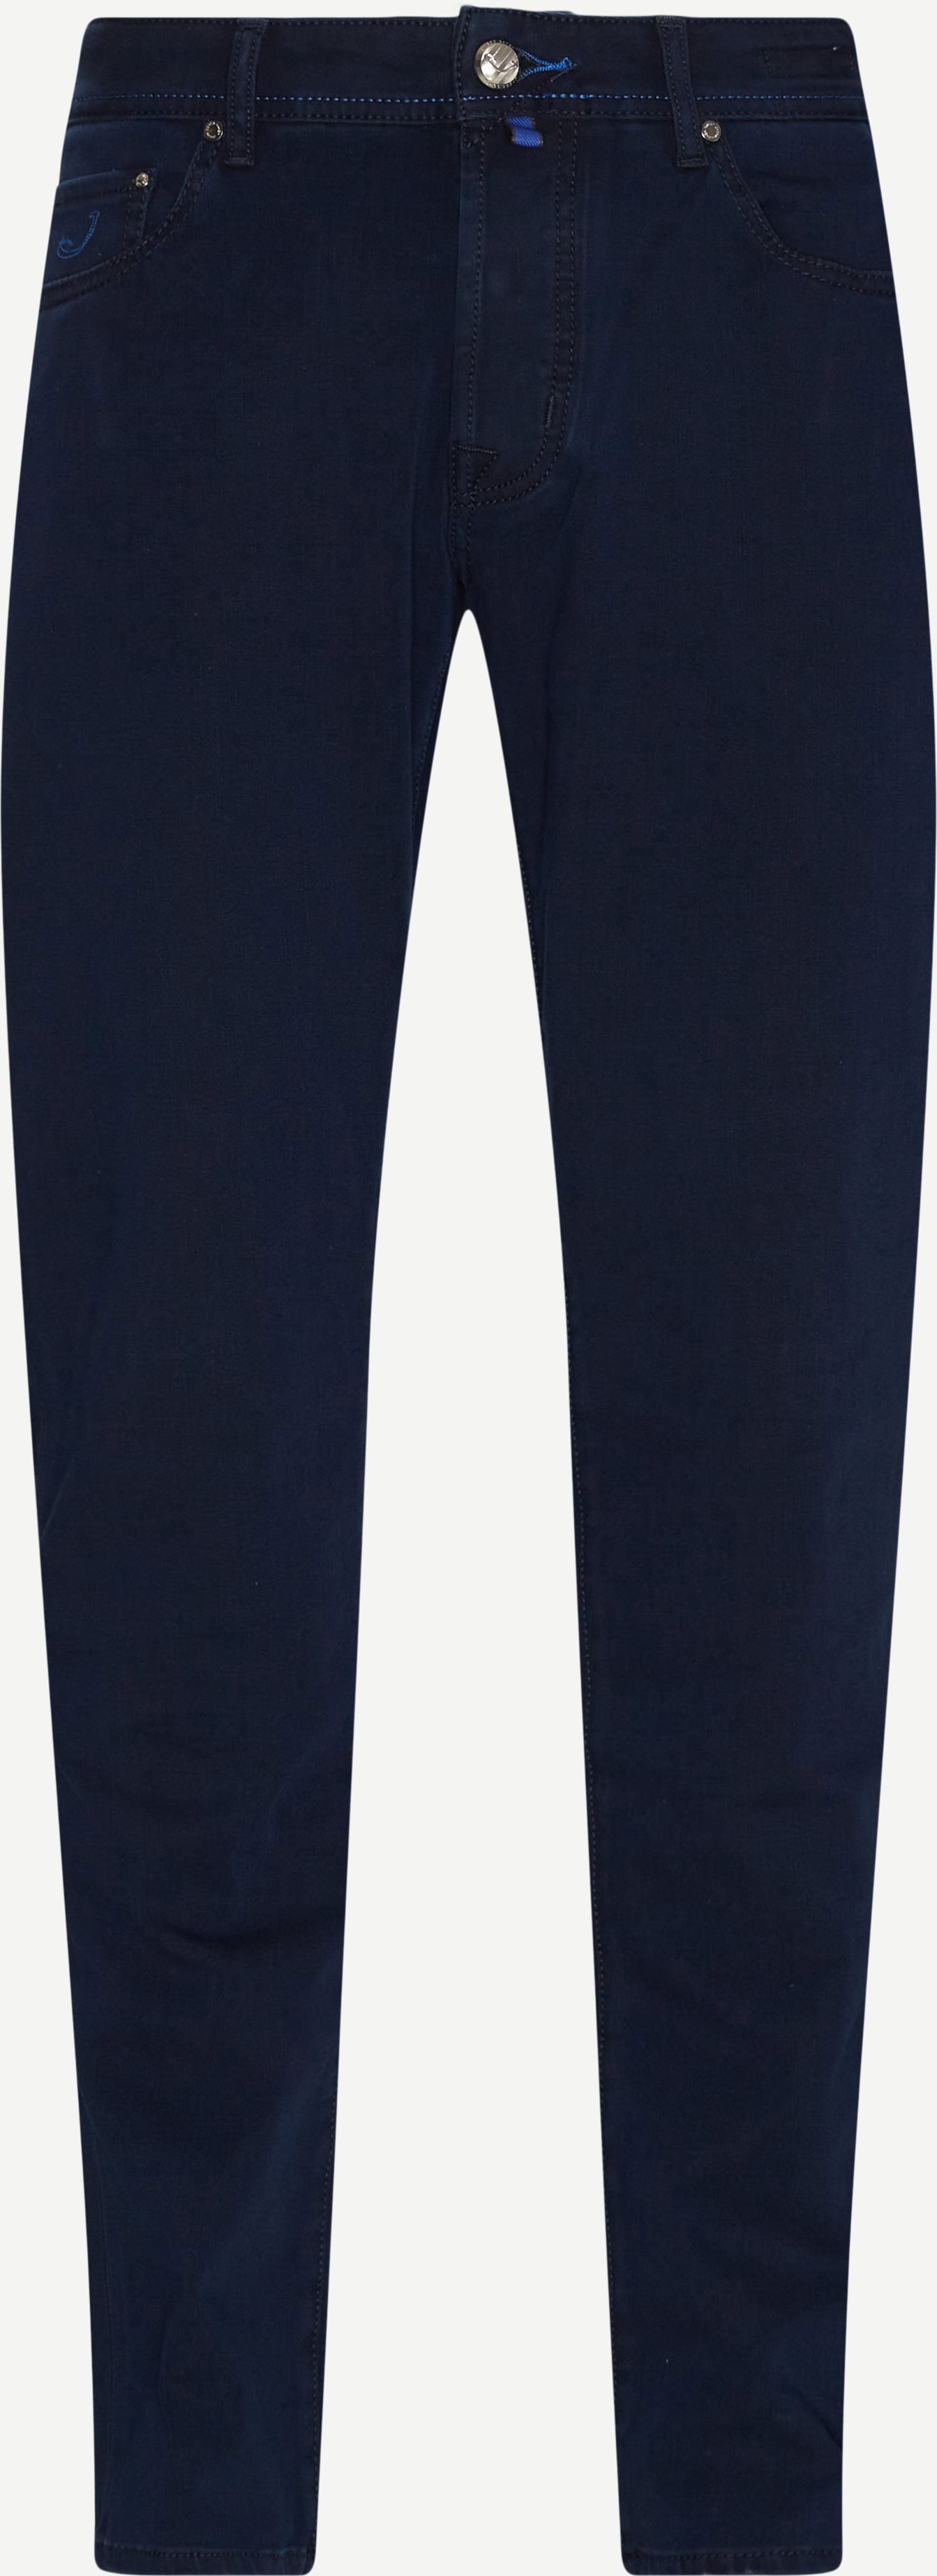 J688 3580 Bard Jeans - Jeans - Slim fit - Jeans-Blau